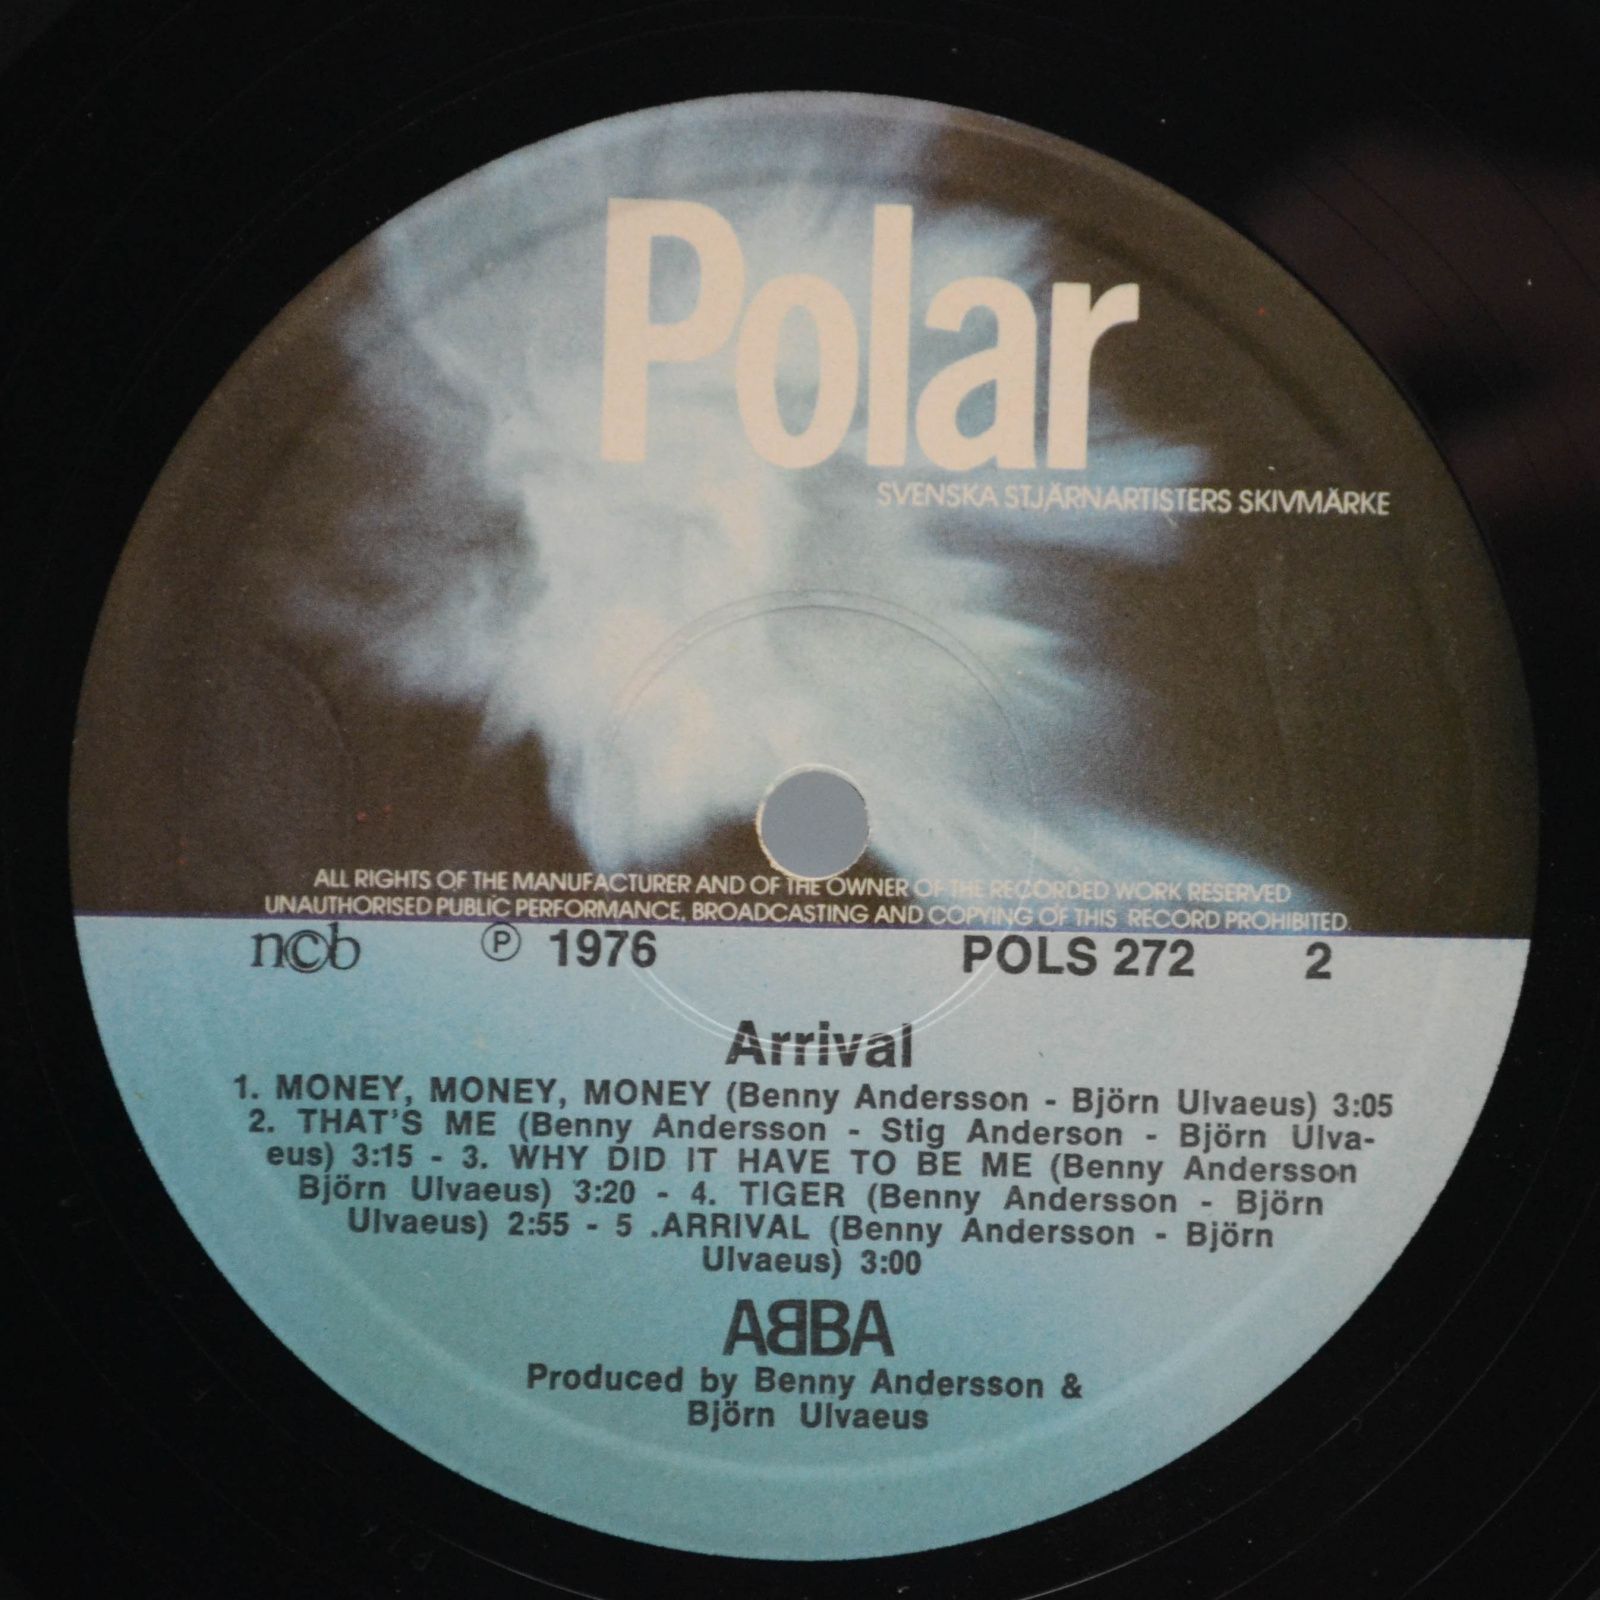 ABBA — Arrival (Sweden), 1976